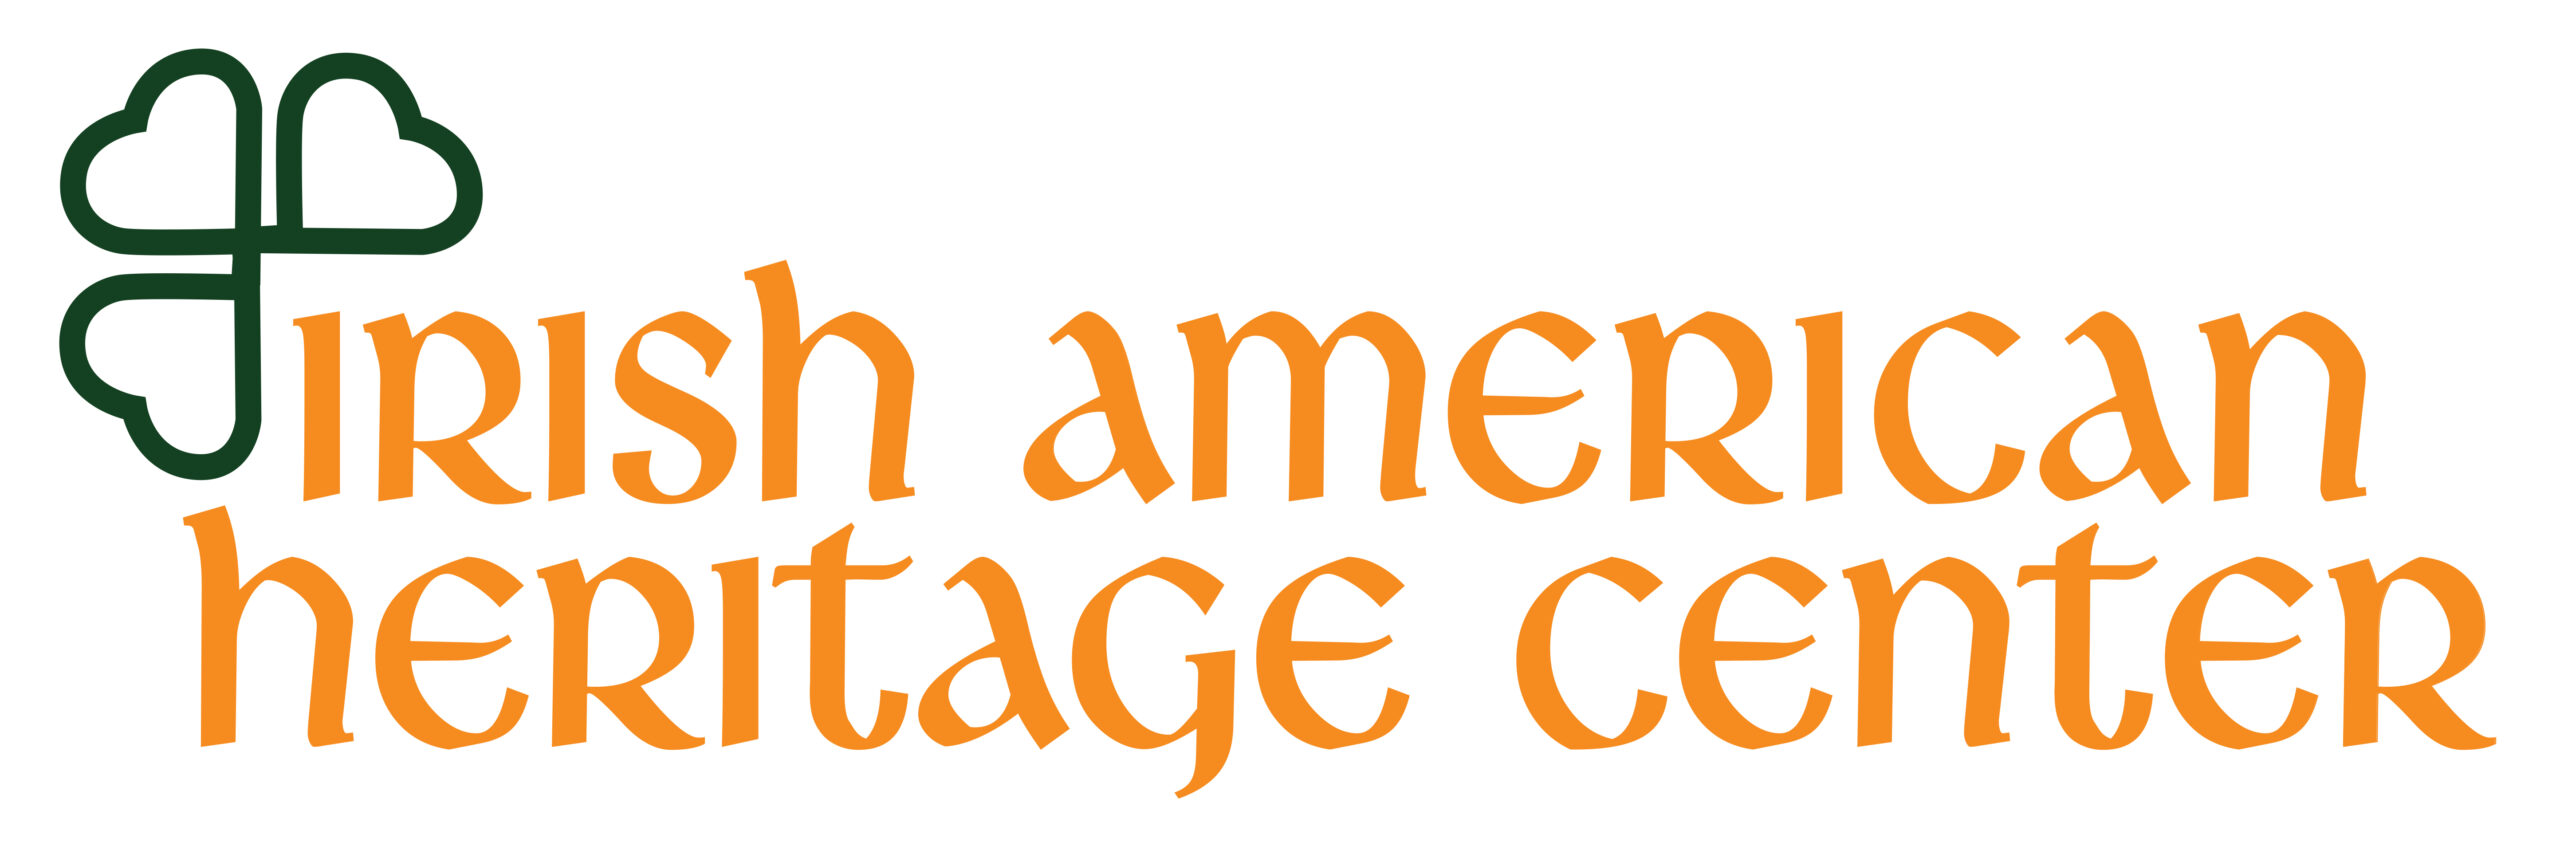 Irish American Heritage Center